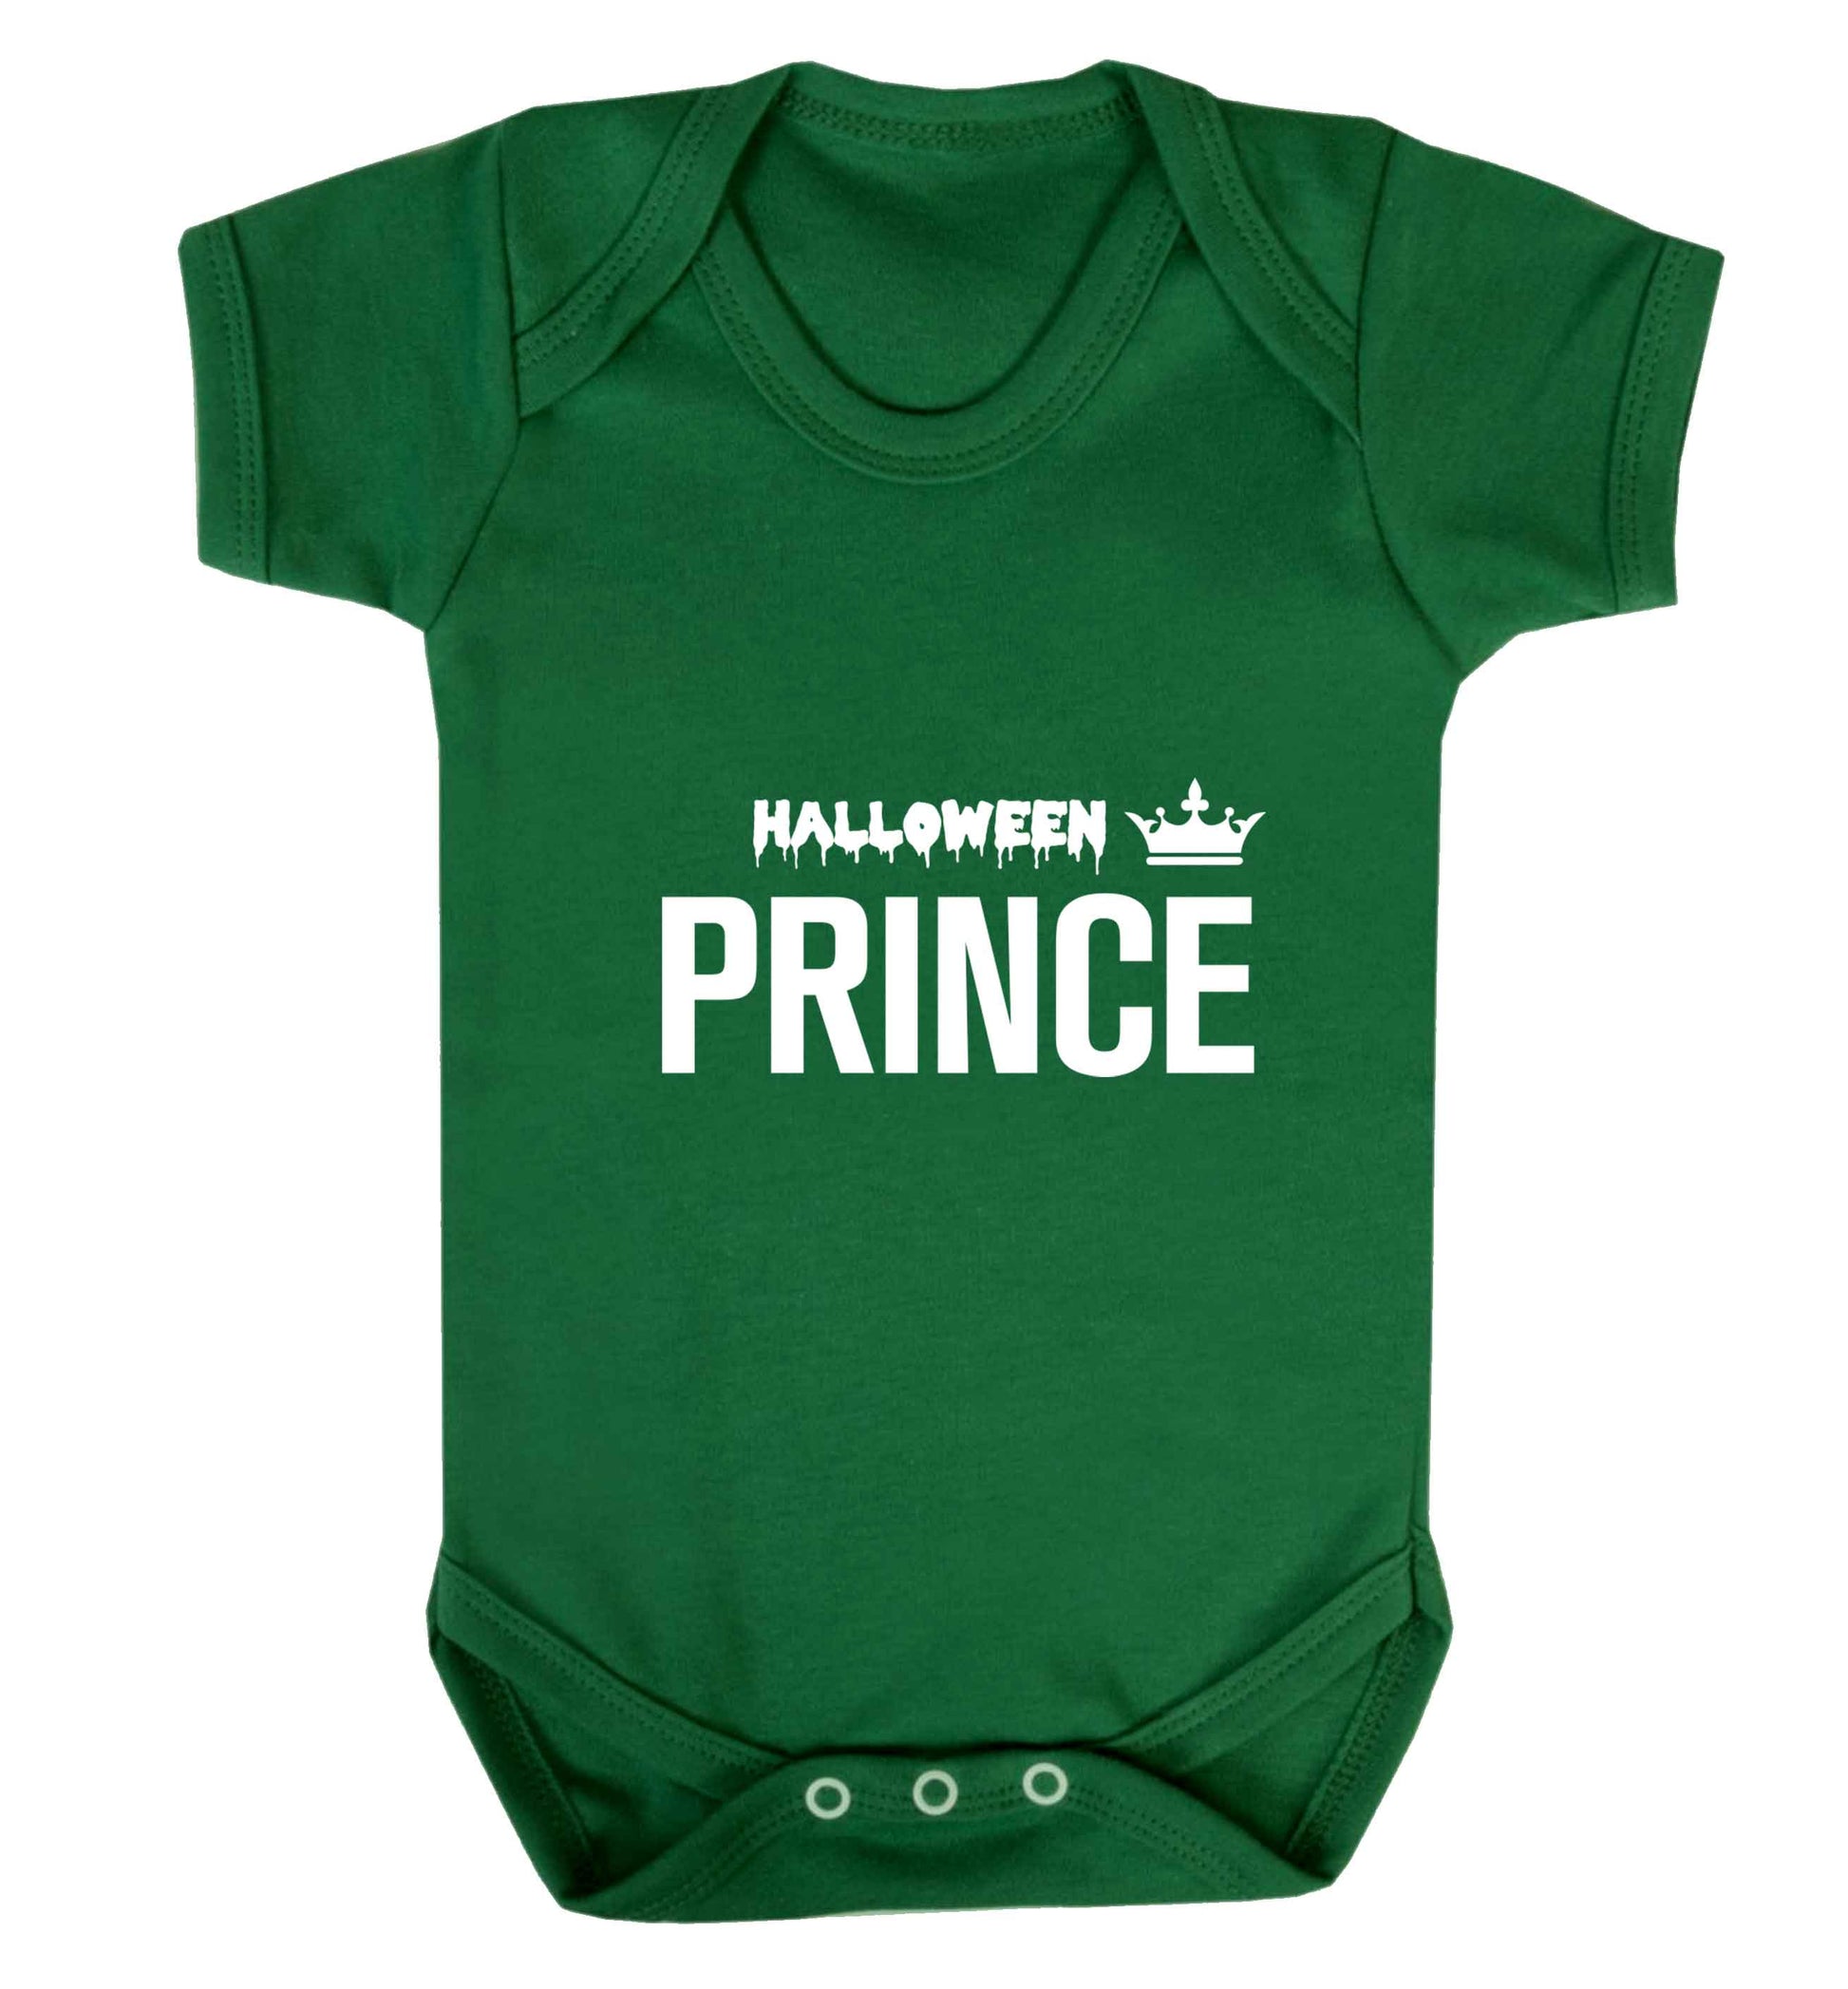 Halloween prince baby vest green 18-24 months